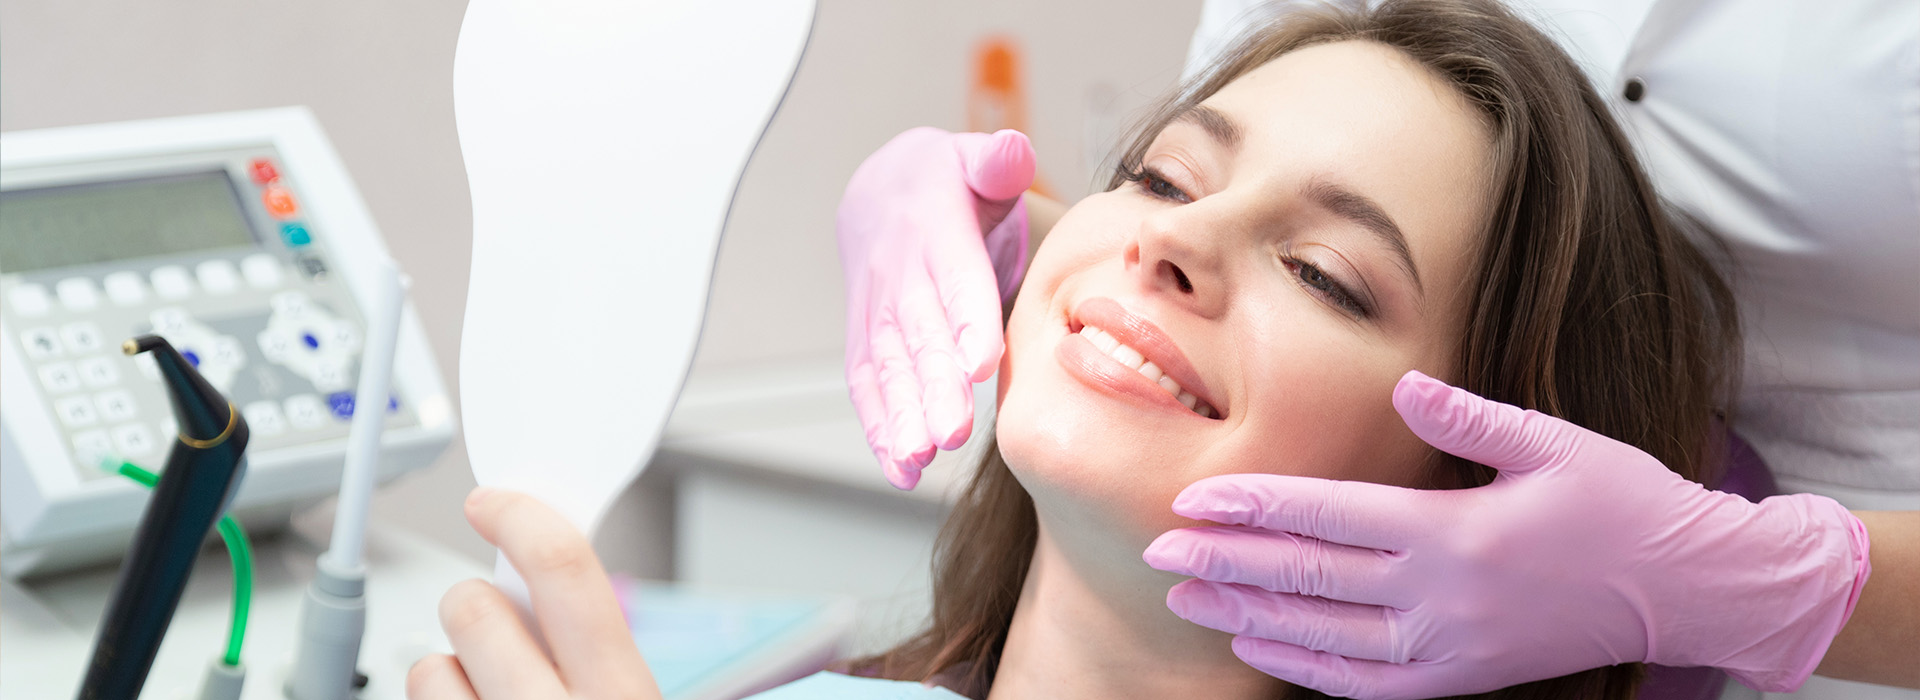 Cedar Knolls Dental Group | Dental Fillings, Teeth Whitening and Dentures